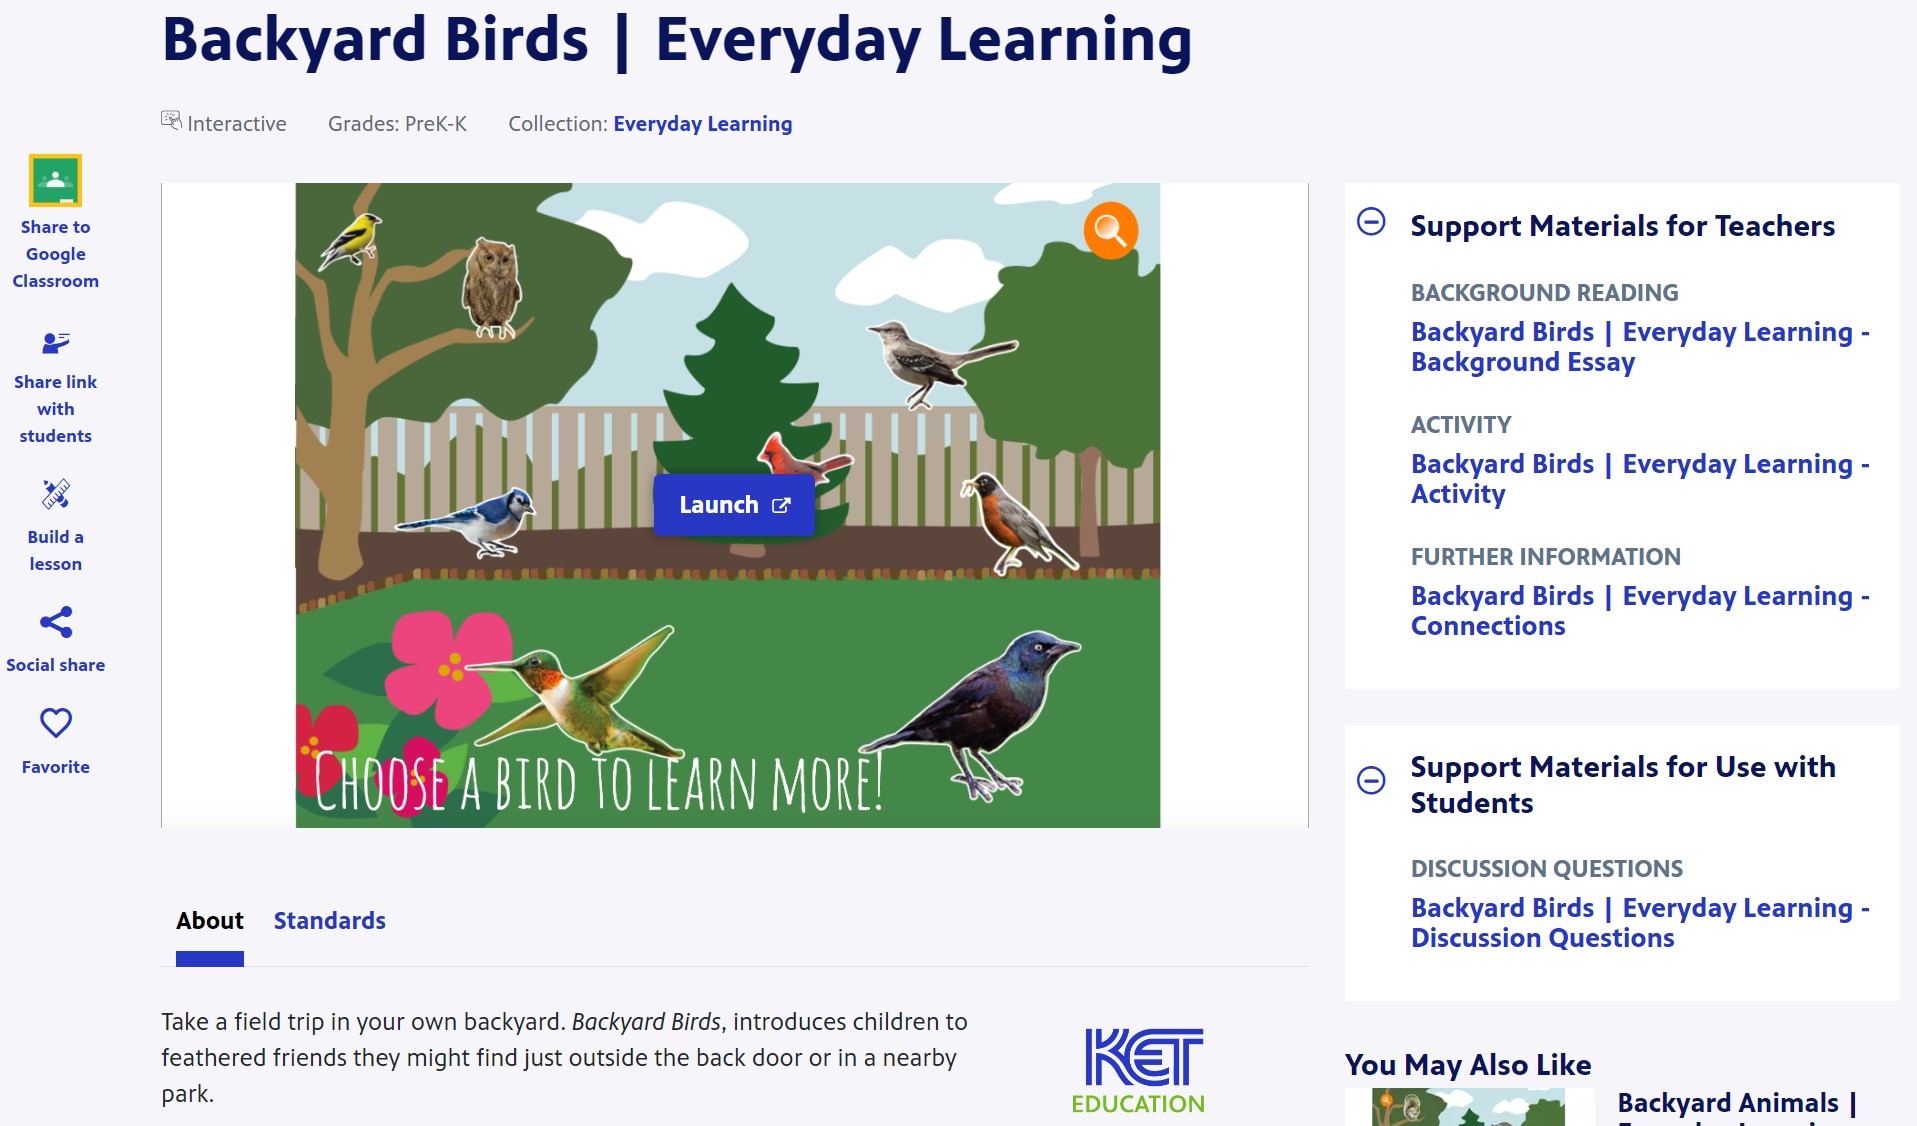 Backyard Birds | Everyday Learning